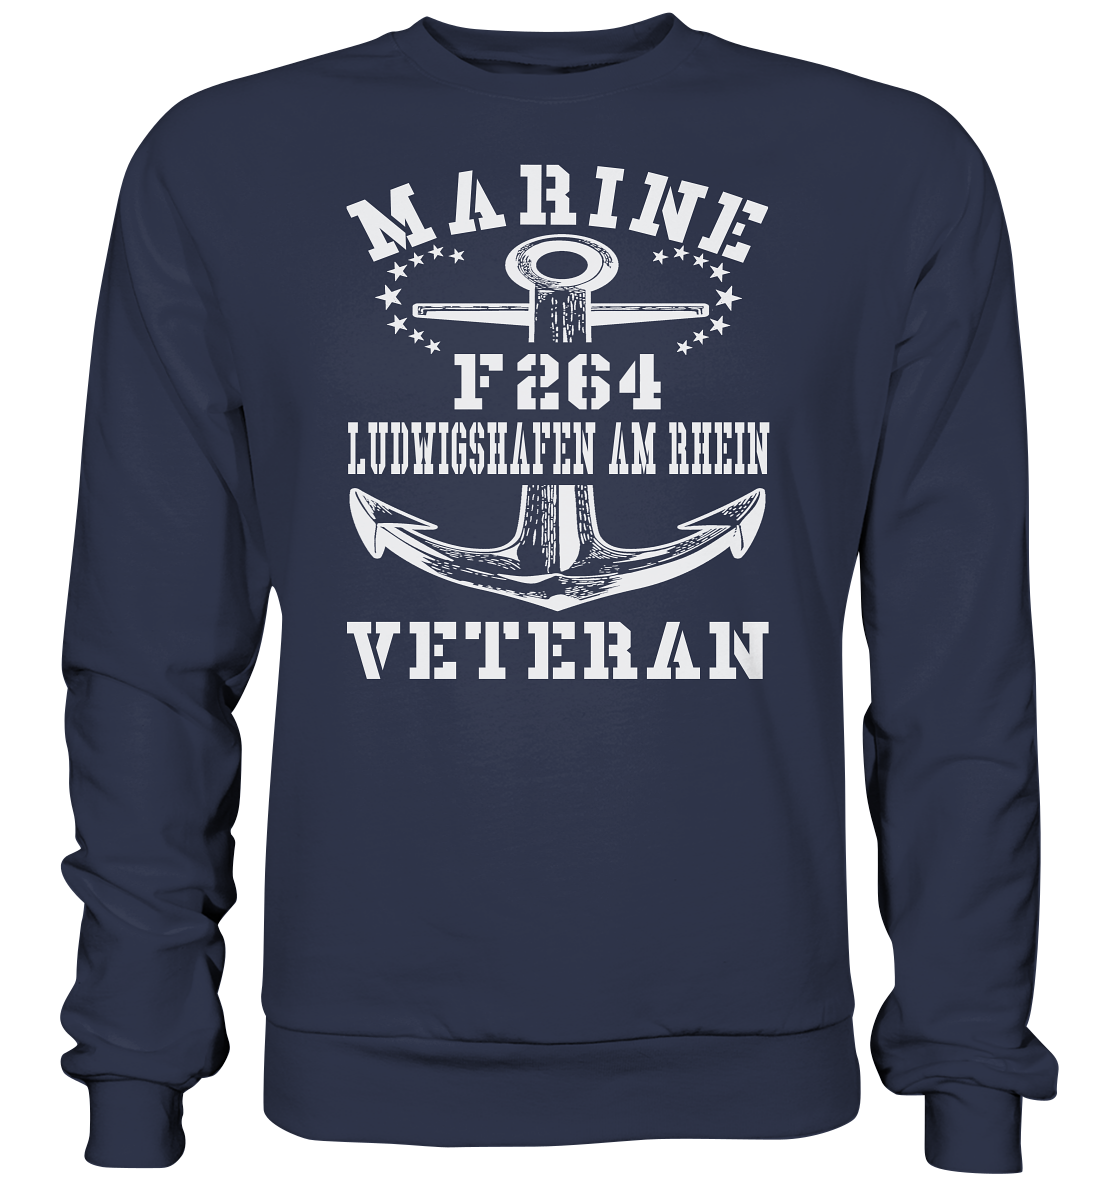 Korvette F264 LUDWIGSHAFEN AM RHEIN Marine Veteran - Premium Sweatshirt